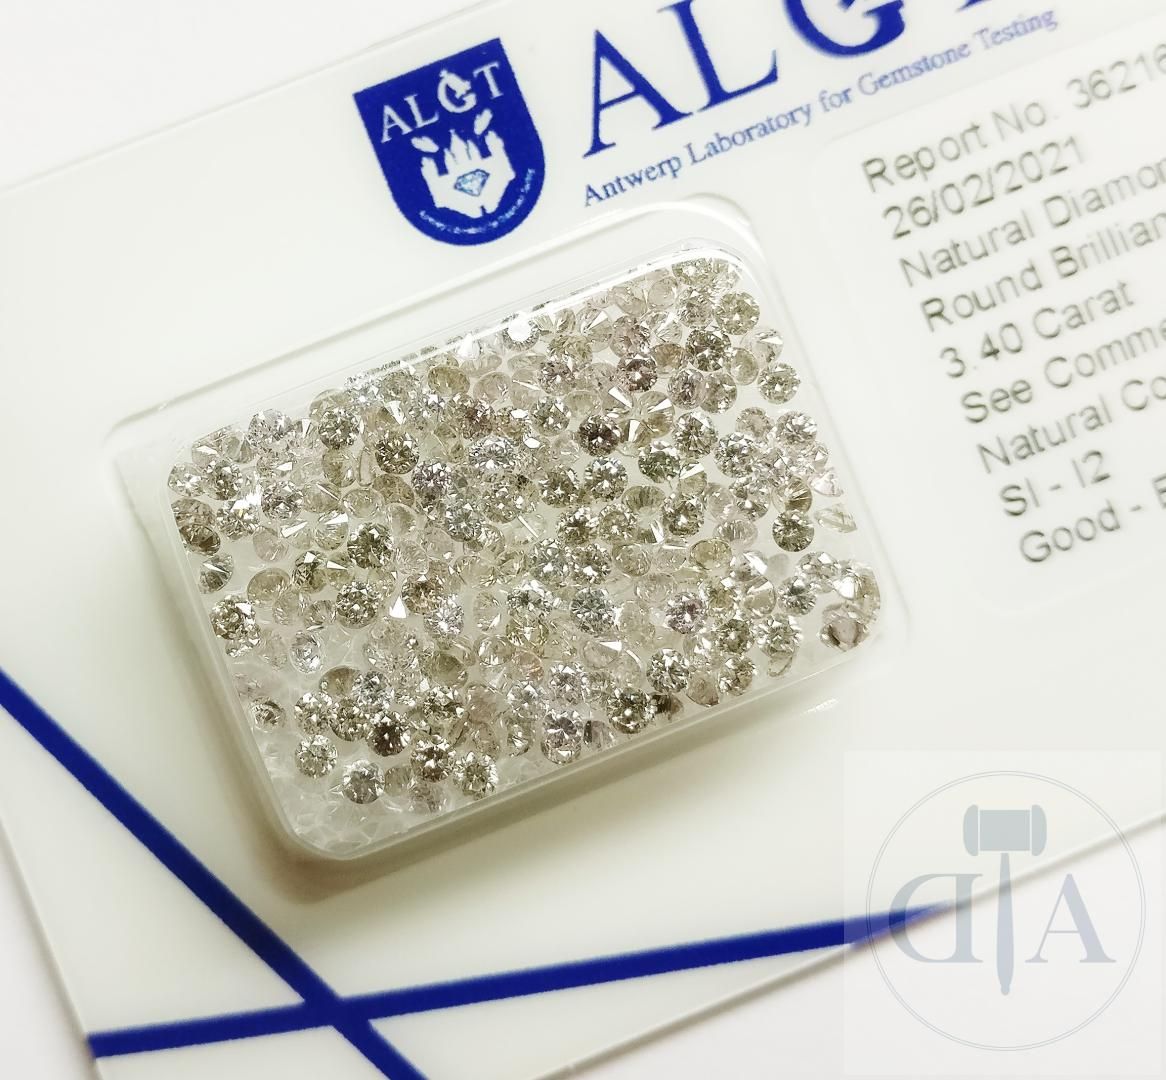 Null "经 ALGT 认证的 3.40 克拉钻石- ALGT 证书编号：36216686 
- 形状：圆形明亮式切割圆形明亮式切割
- 克拉重量： 3.40&hellip;